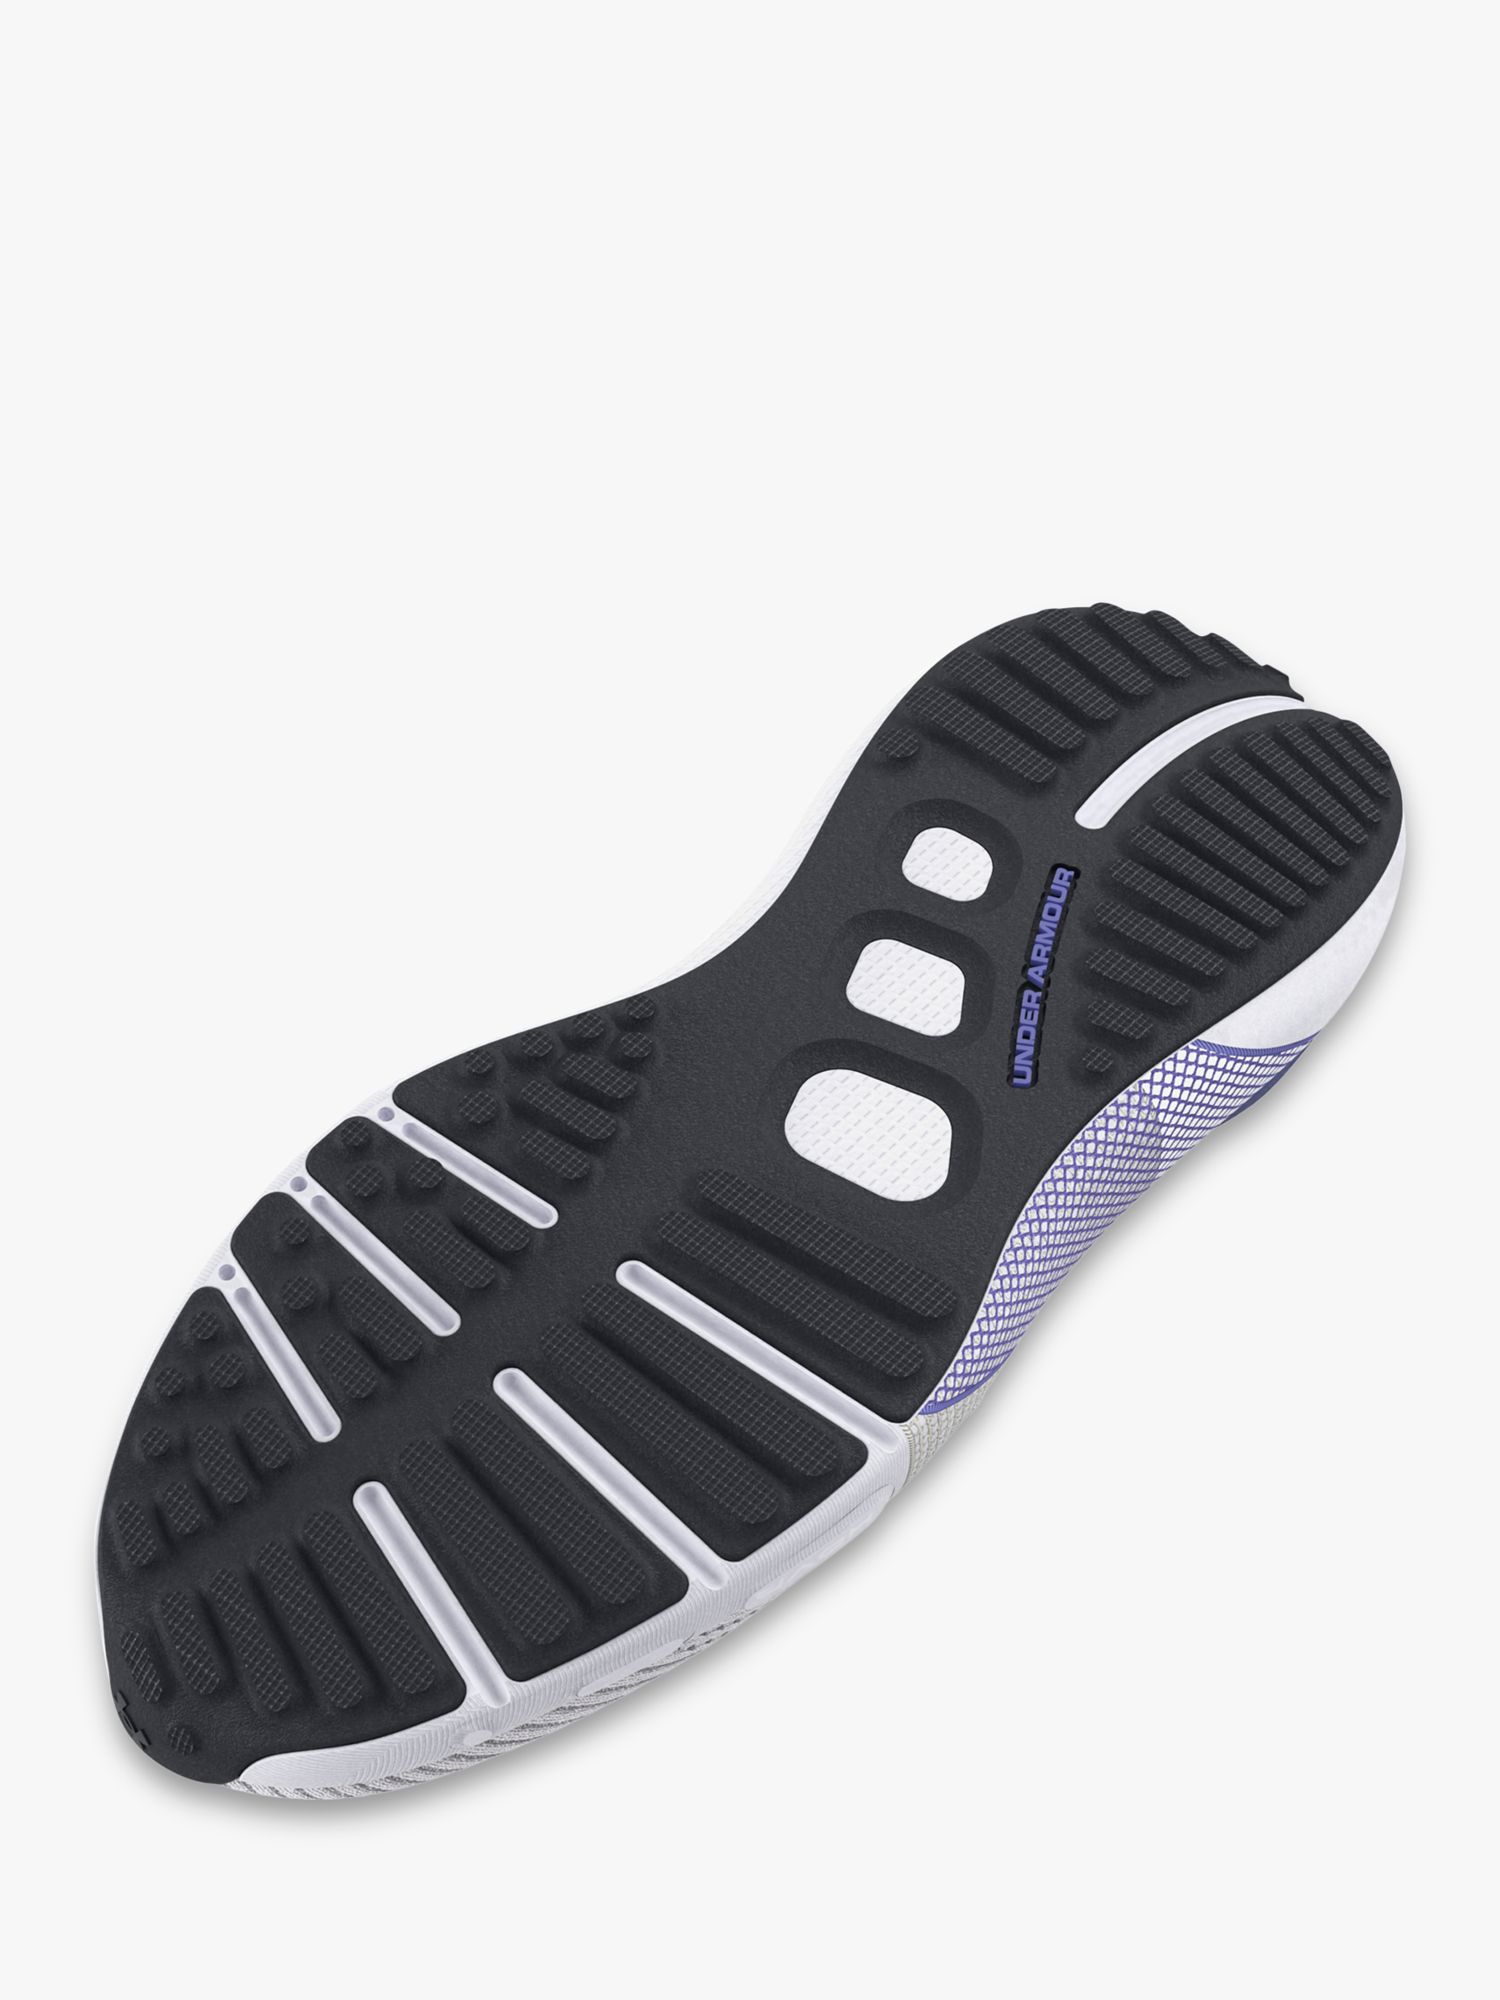 Buy Under Armour Phantom 3 Running Shoes, White/Black Online at johnlewis.com